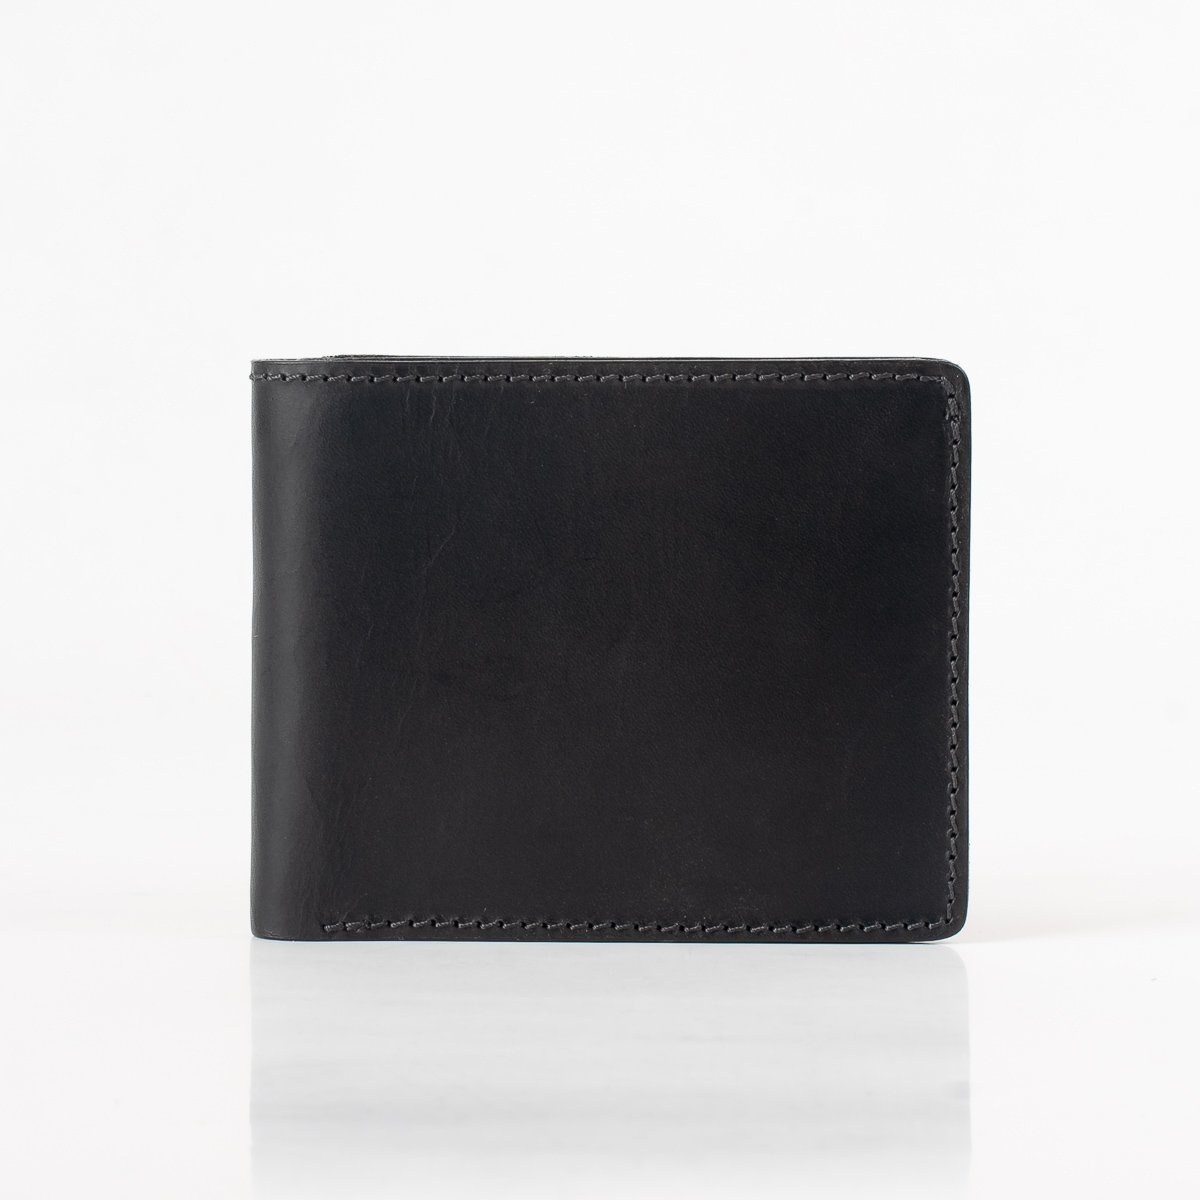 OGL-KINGSMAN-BF OGL Kingsman Classic Bi Fold Wallet - Black, Brown or Tan - 4